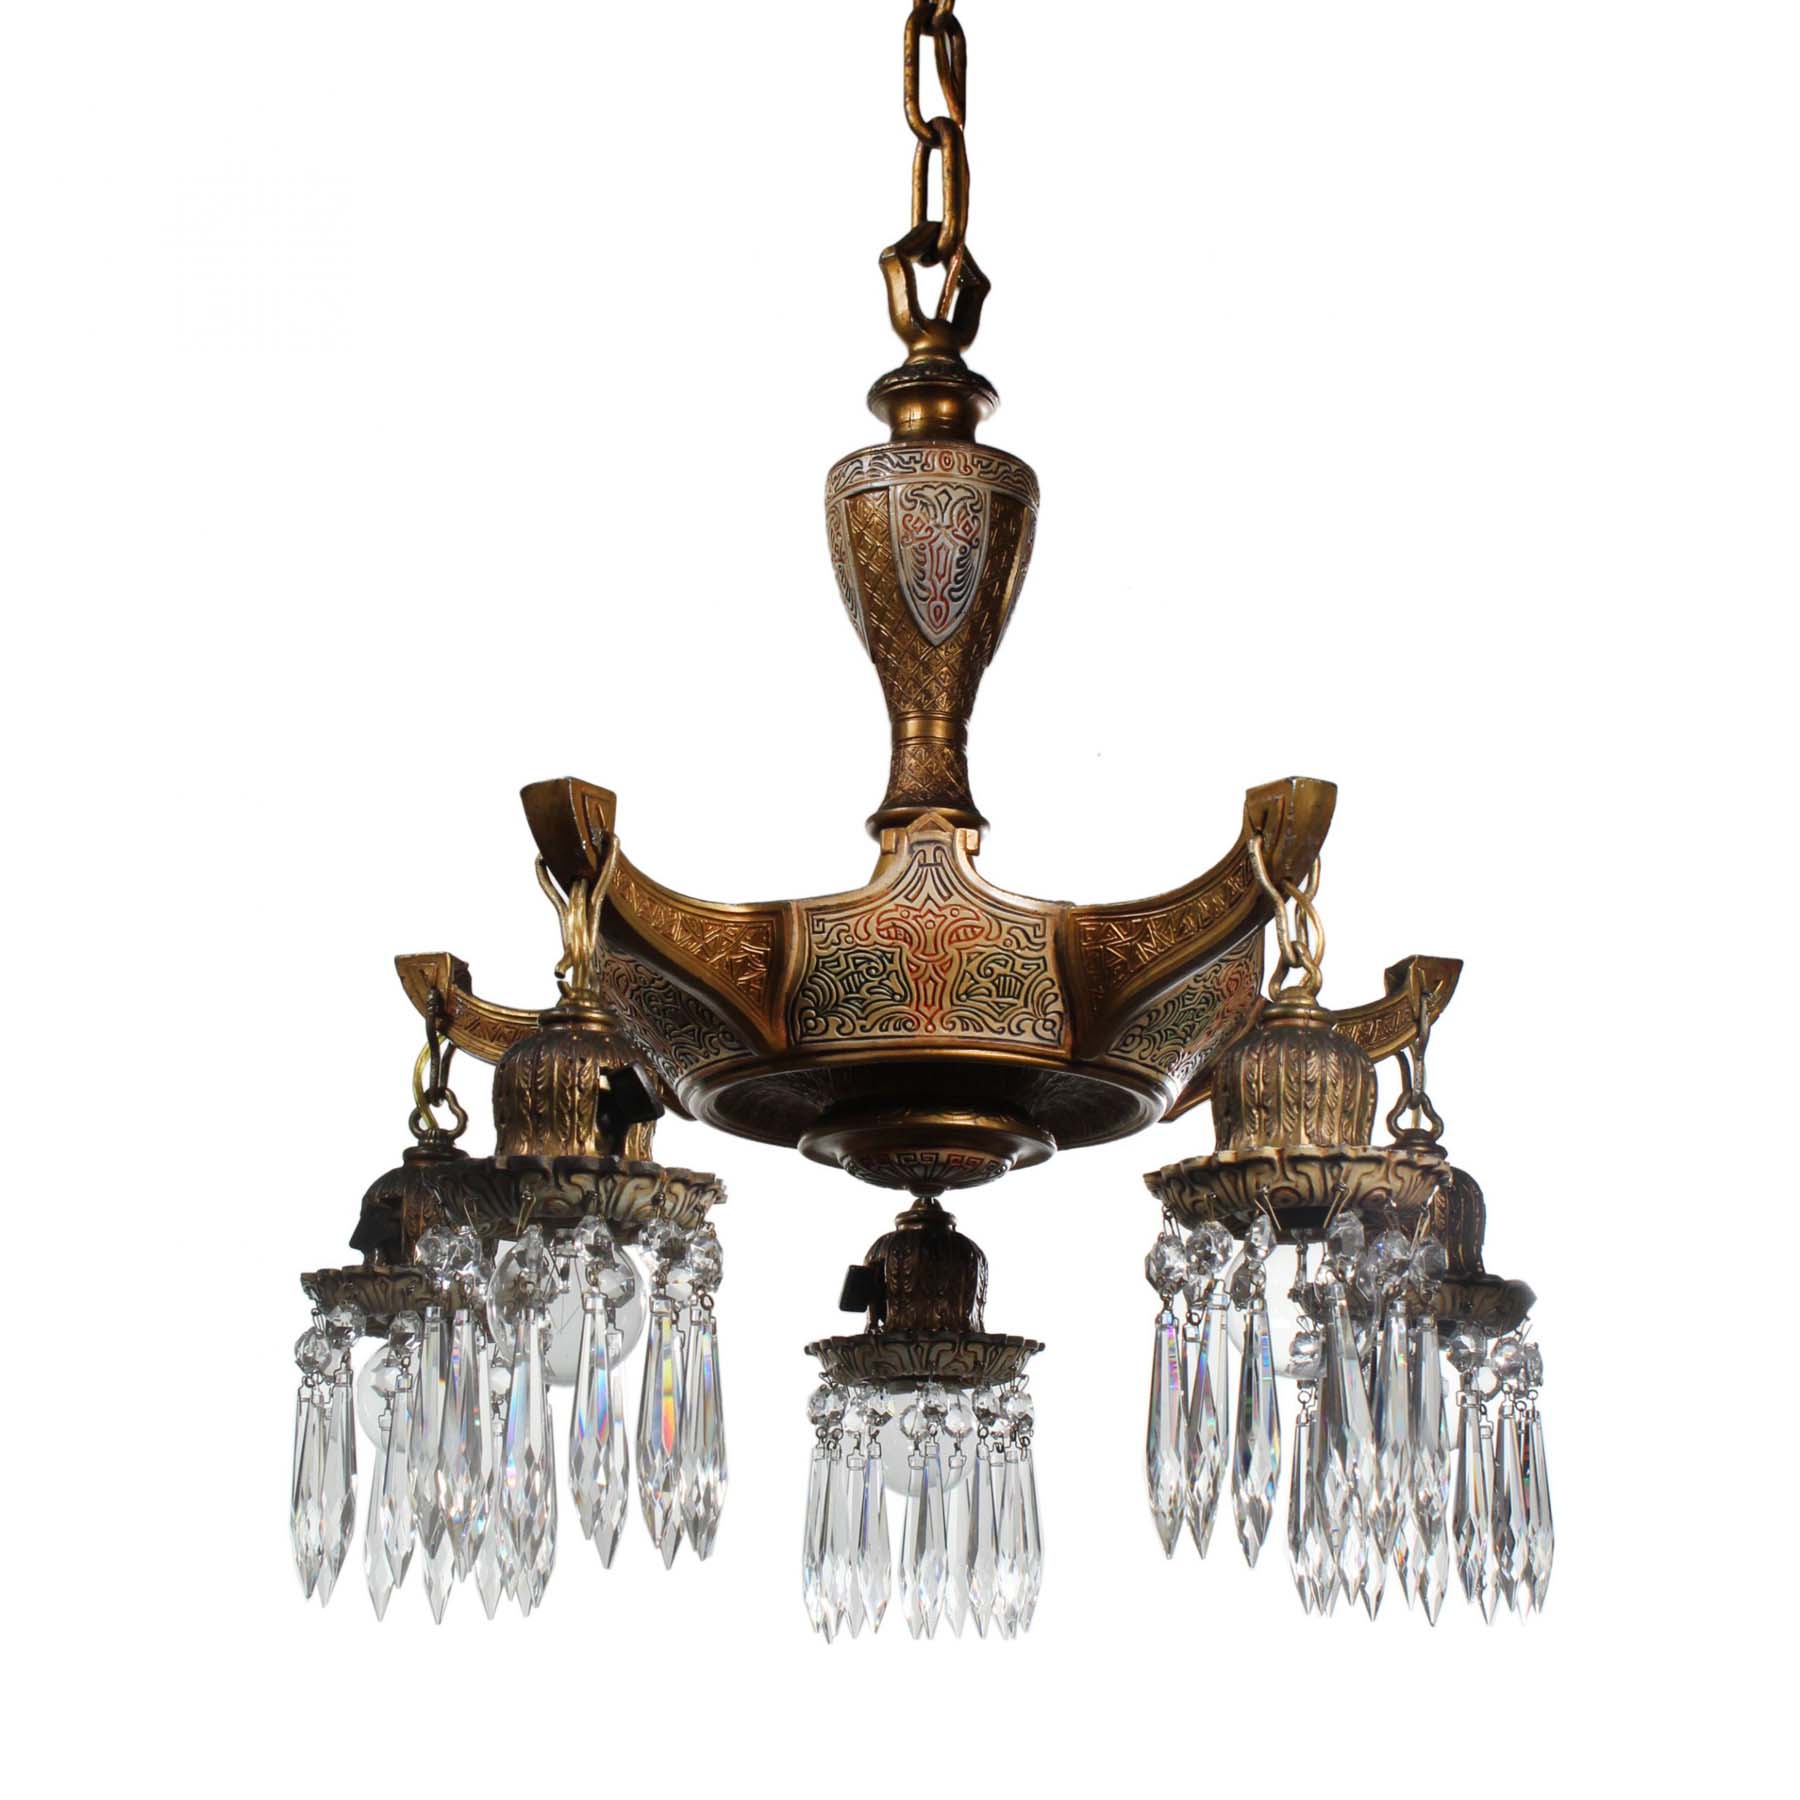 SOLD Antique Spanish Revival Chandelier, Empire Lighting-0